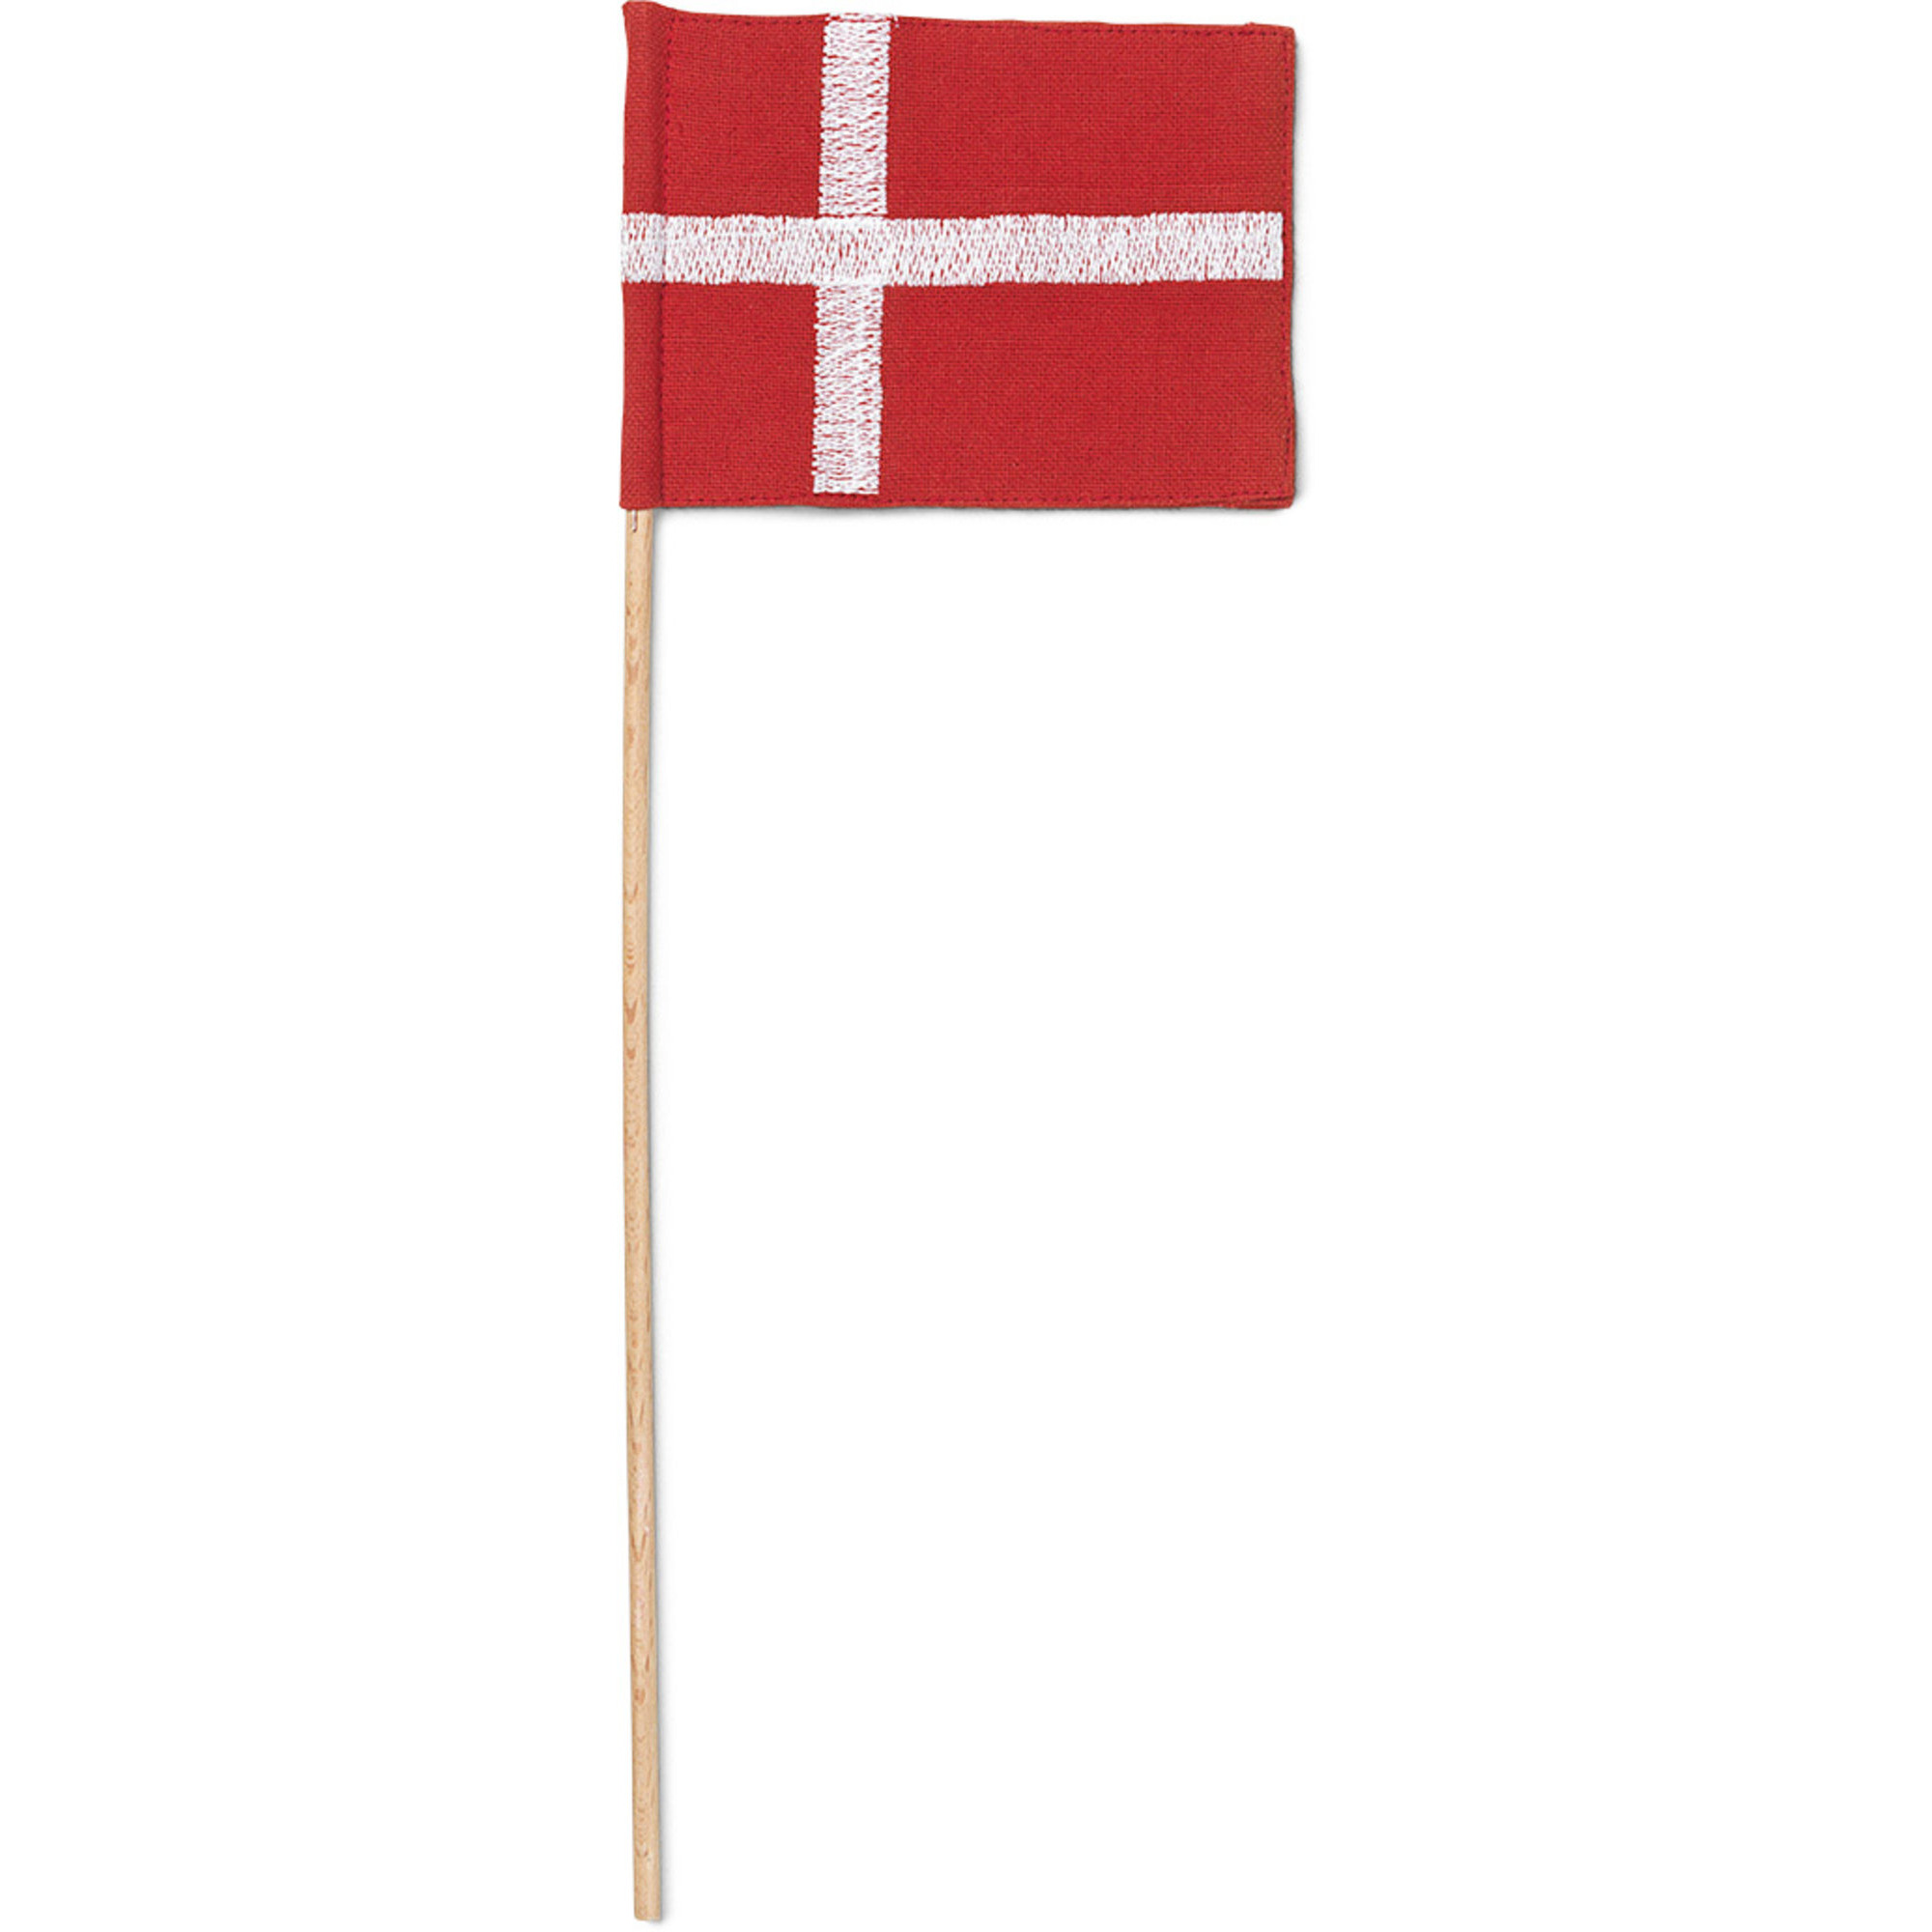 Kay Bojesen Tekstilflagg til garder Tilbehør